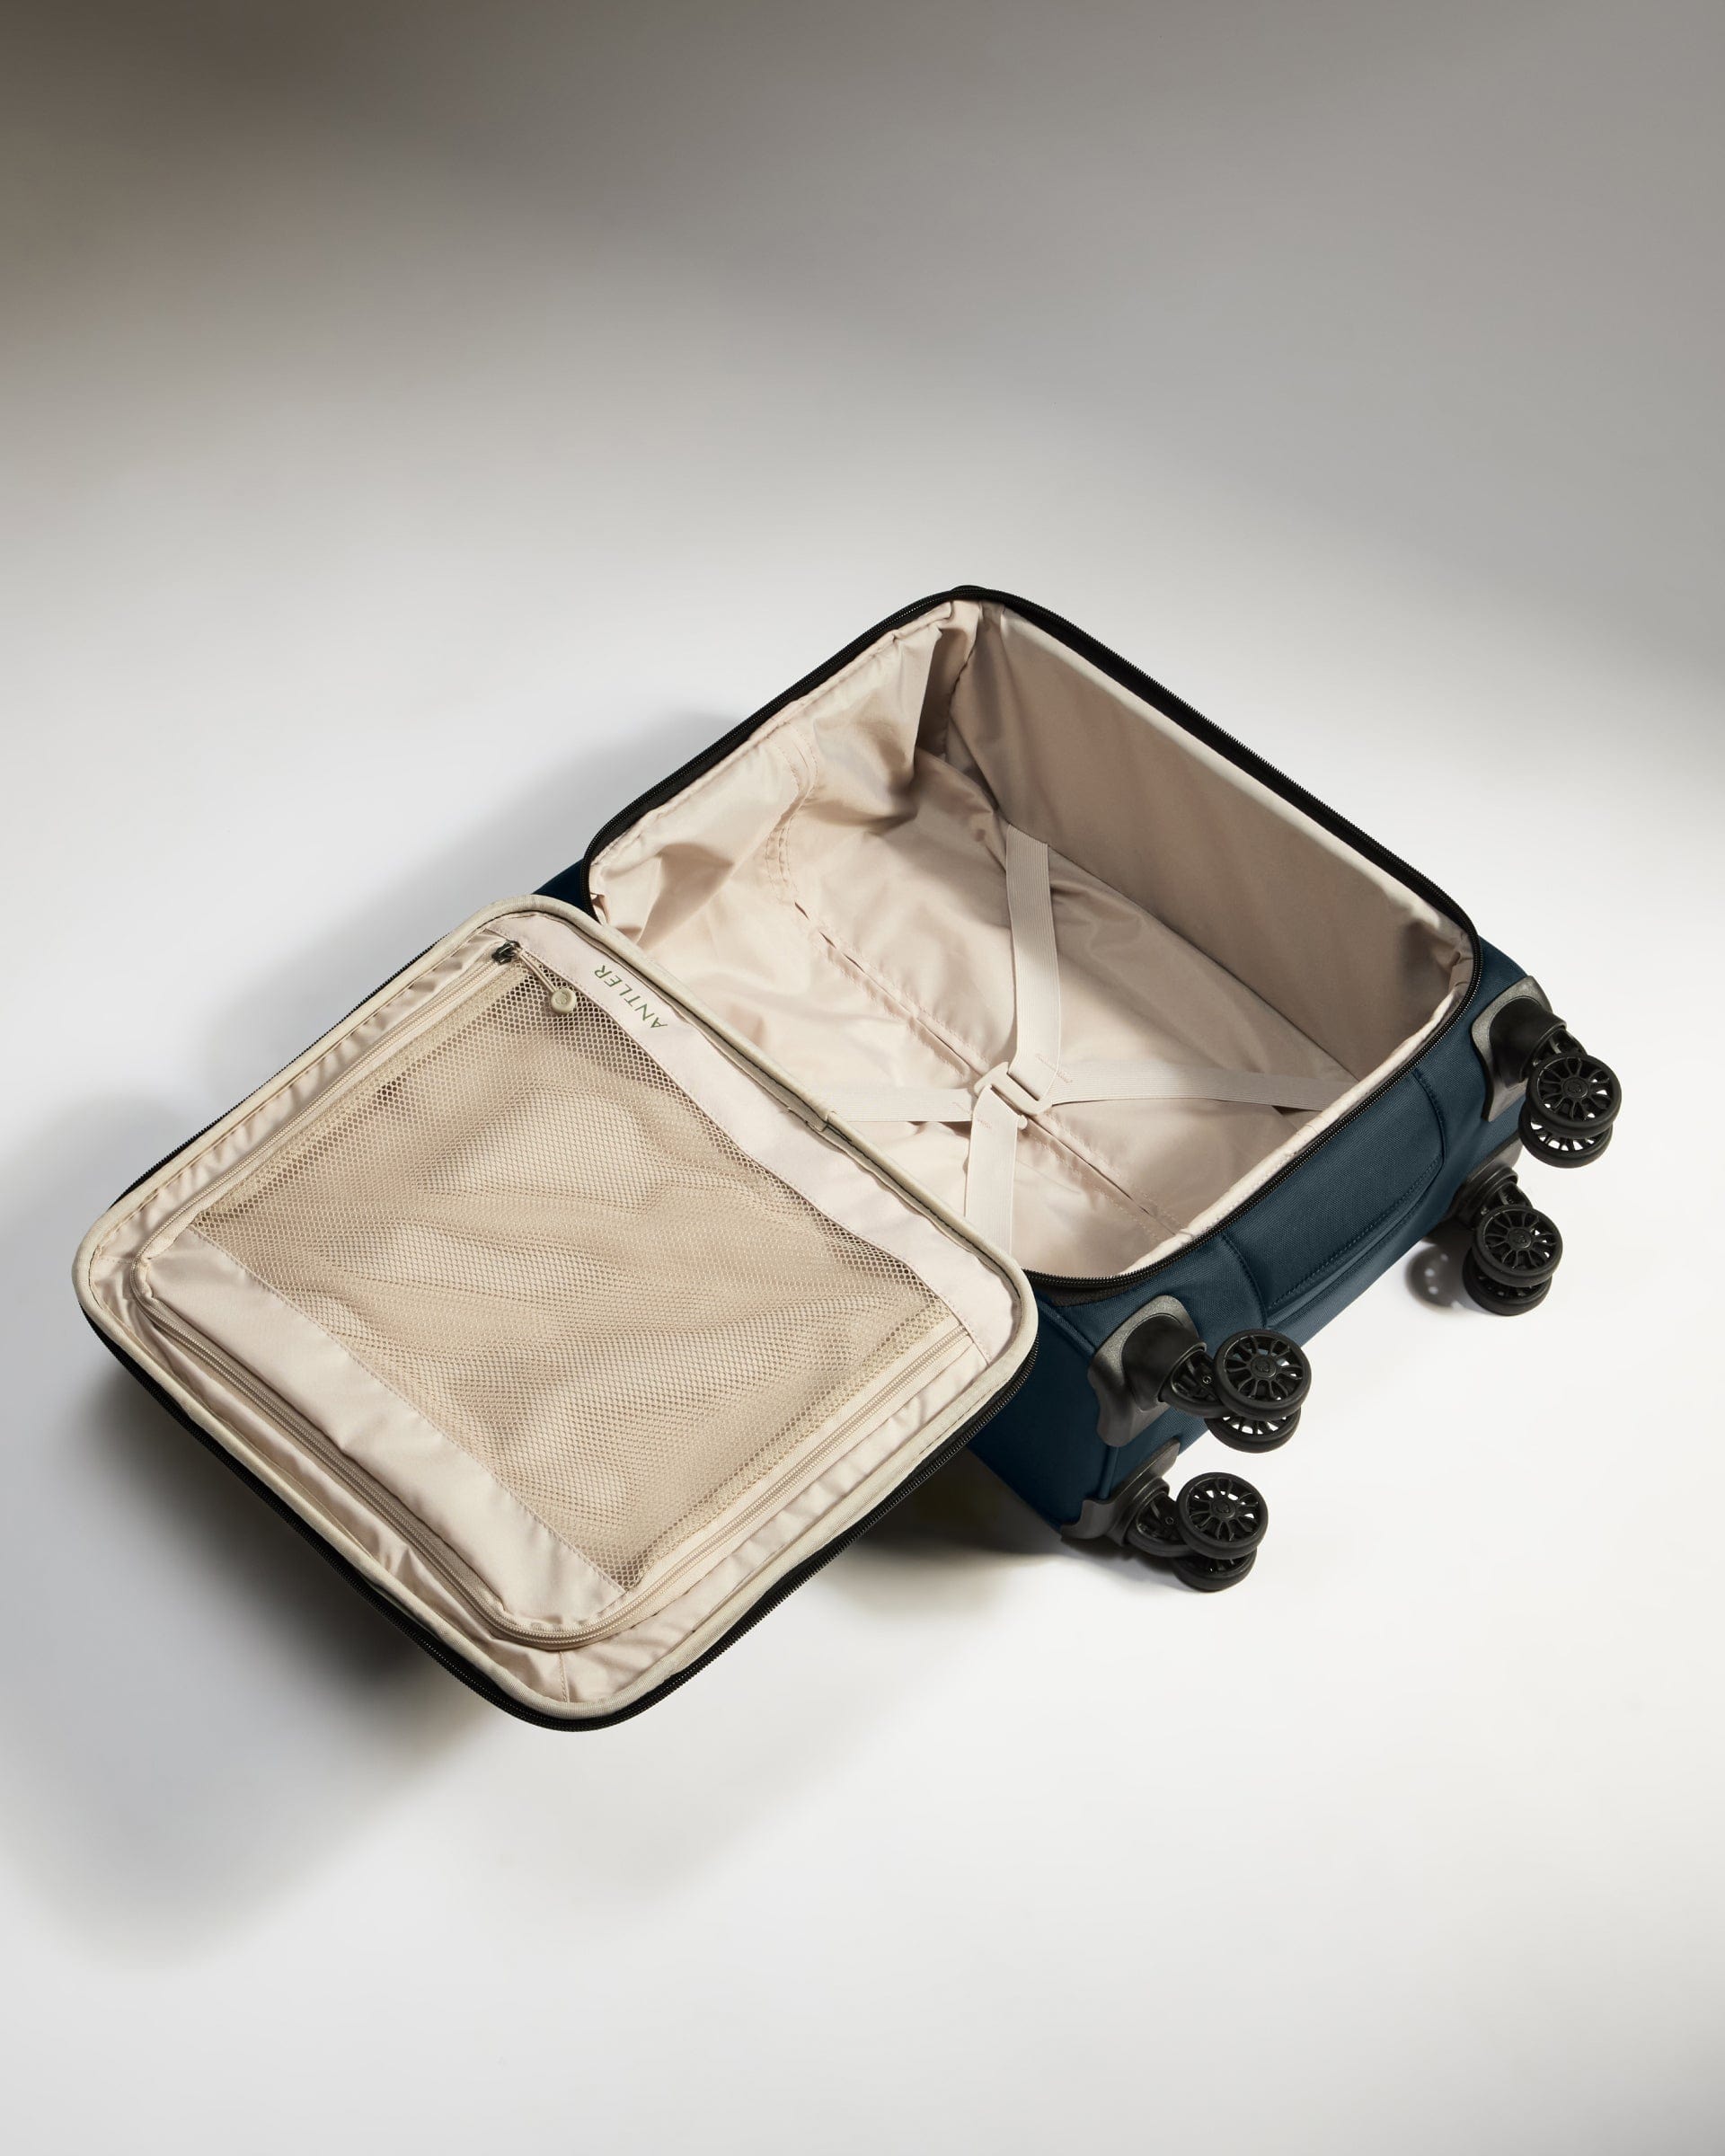 Antler Luggage -  Soft Stripe Cabin in Indigo - Soft Suitcase Soft Stripe Cabin in Indigo | Soft Suitcase | Cabin Bag